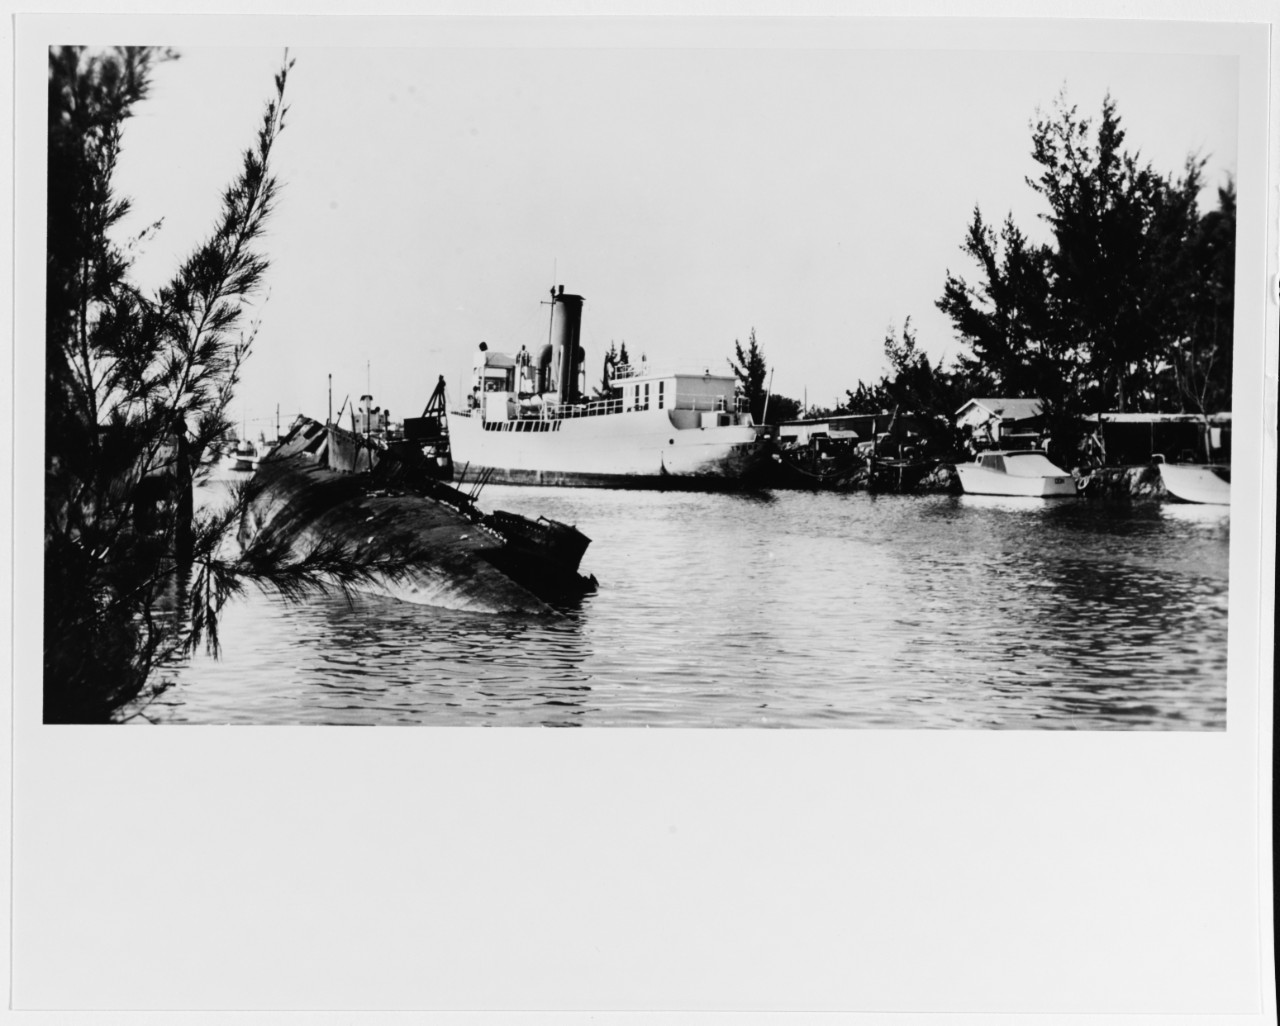 SS TRADE WINDS, ex-USCGC GRESHAM (WPG-85)